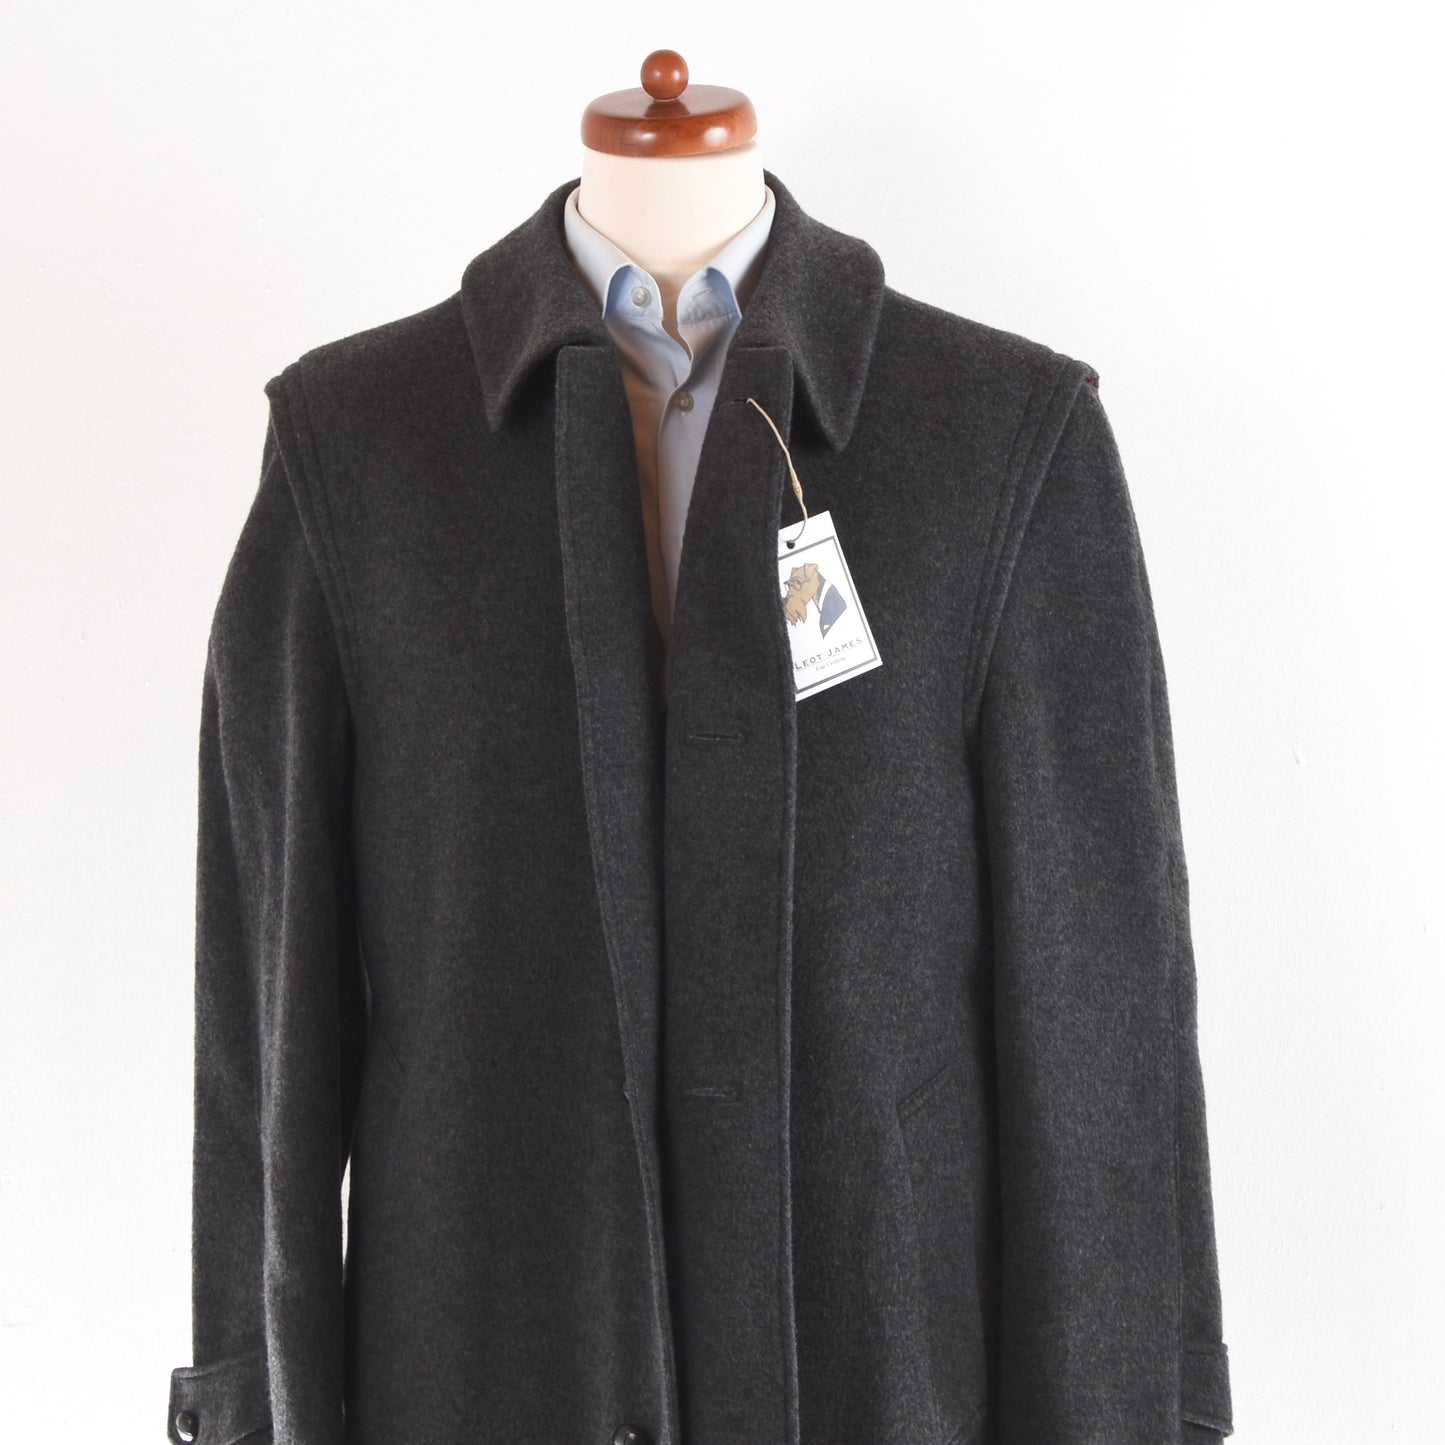 Salko Wool/Cashmere Lodenmantel/Overcoat Size 52 - Grey